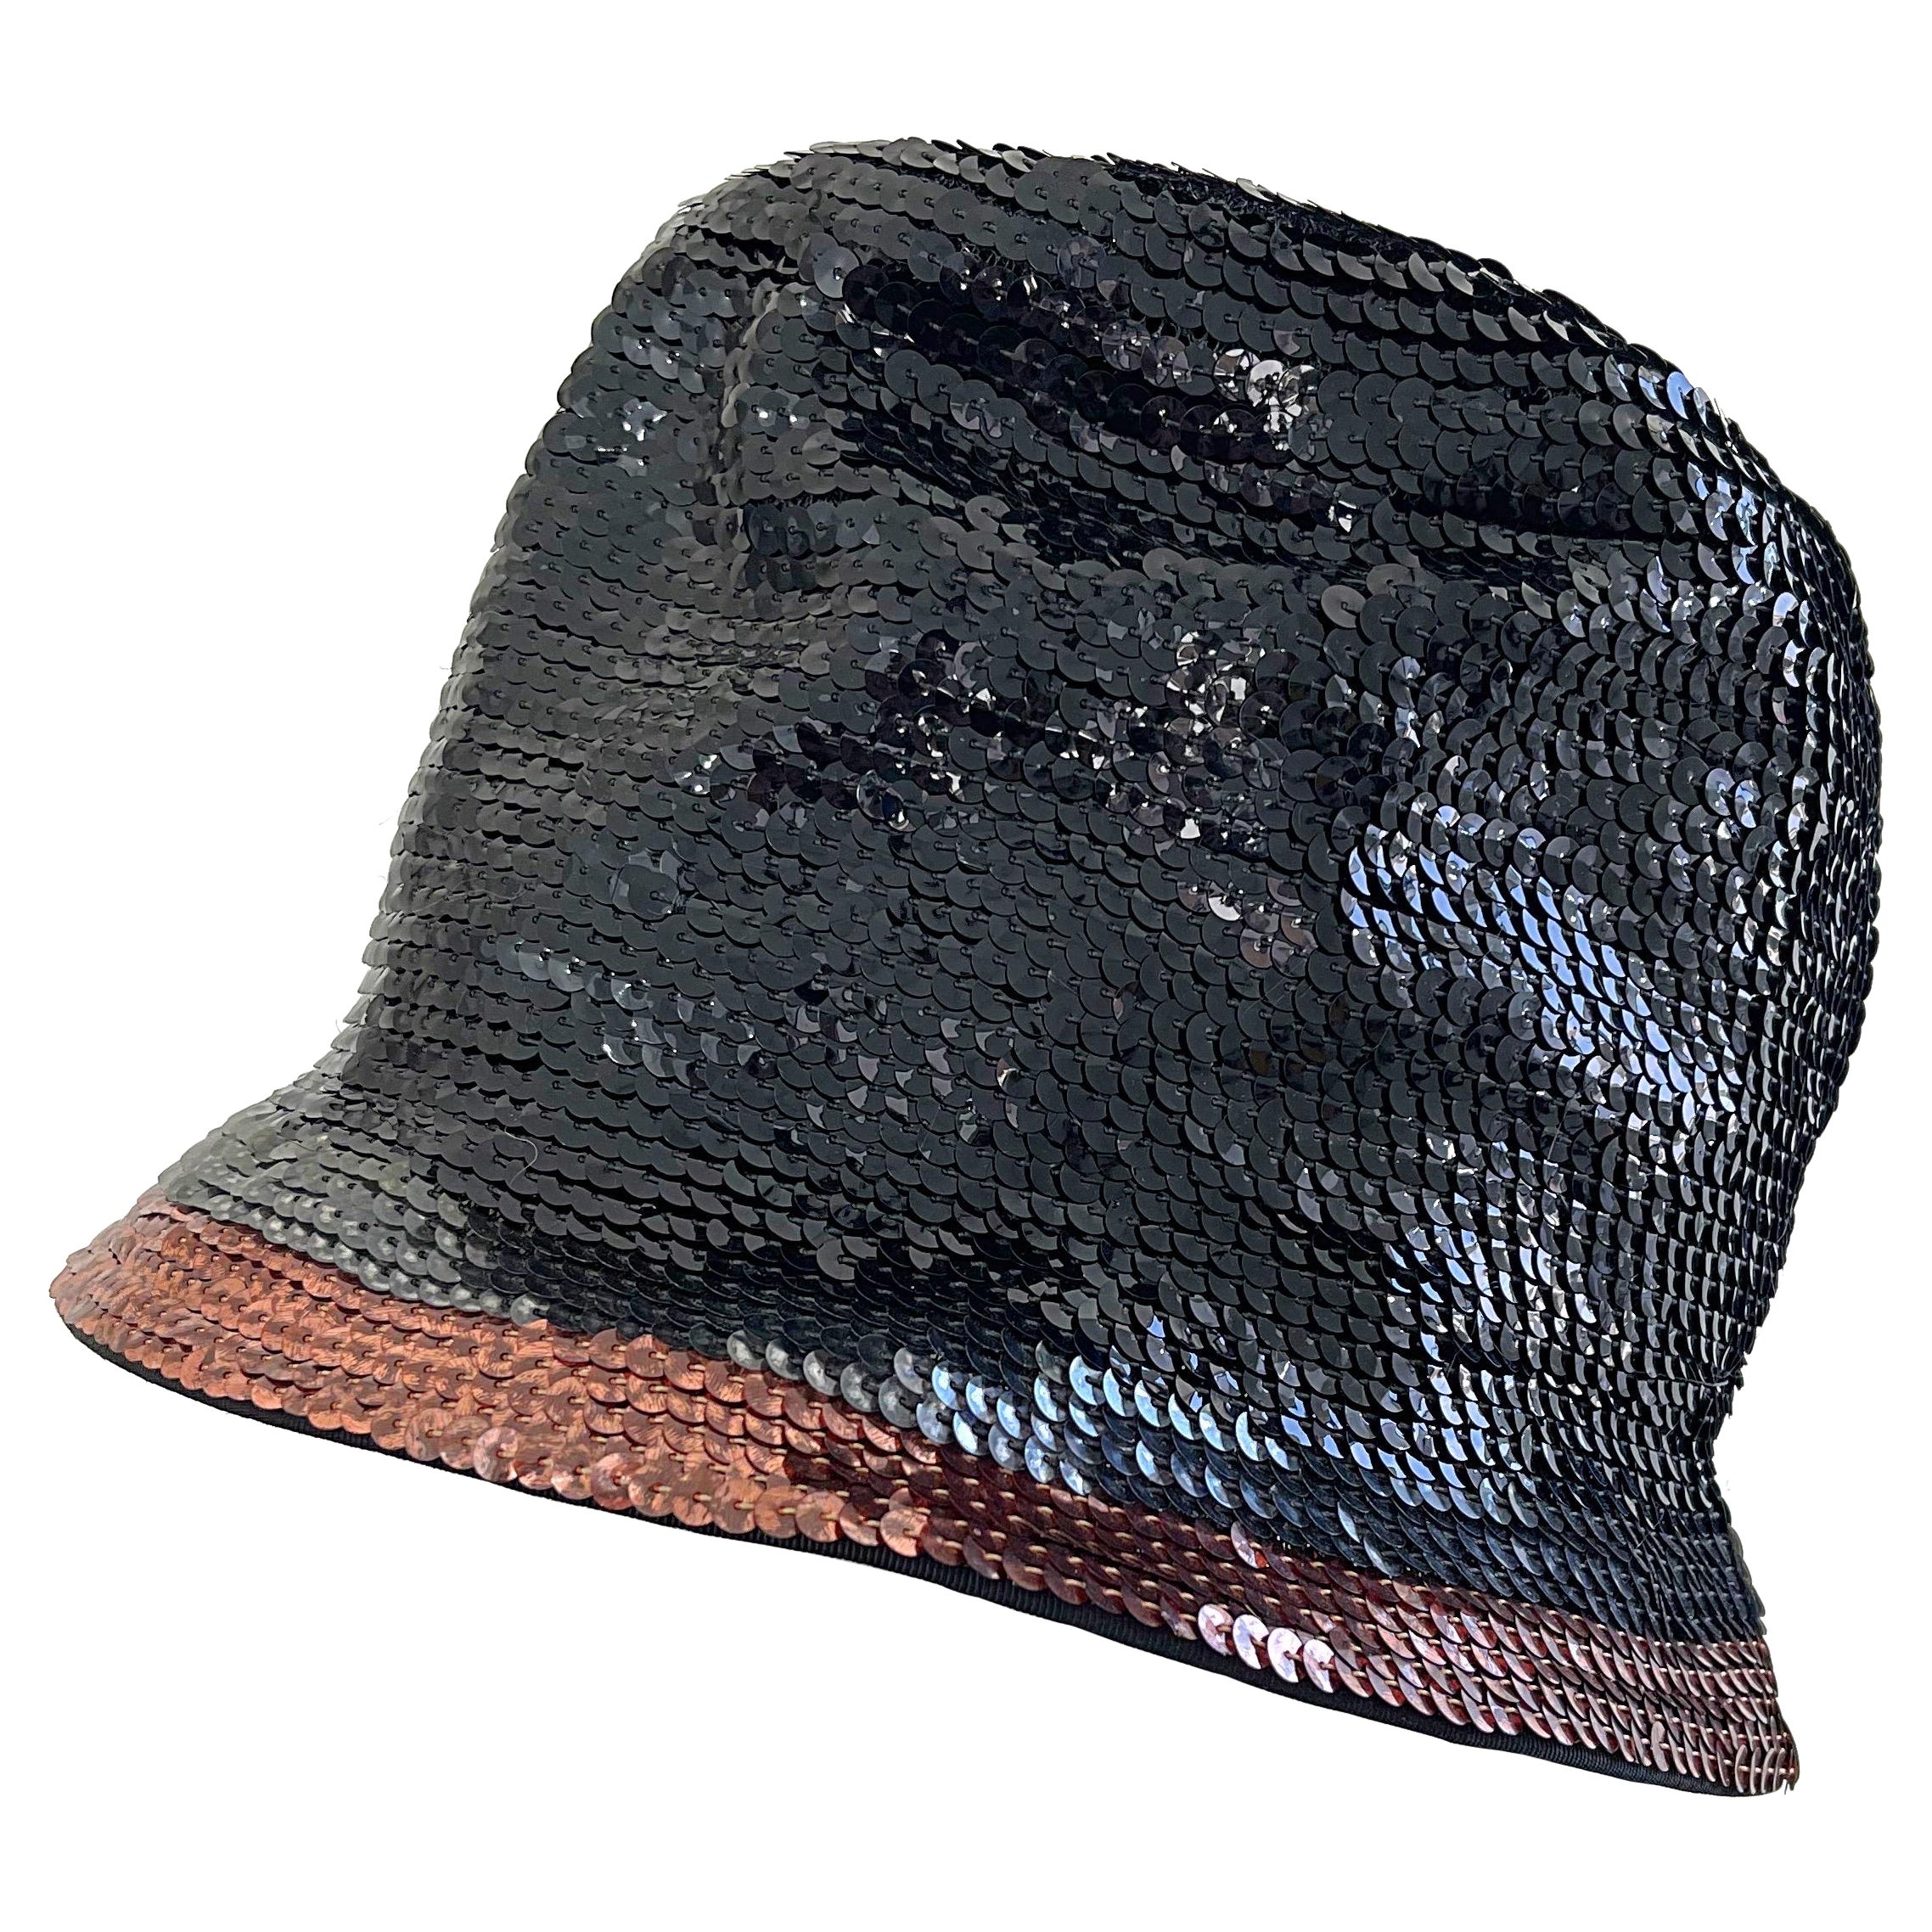 Yves Saint Laurent 1960s YSL Black Gunmetal Bronze Sequin Vintage 60s Cloche Hat